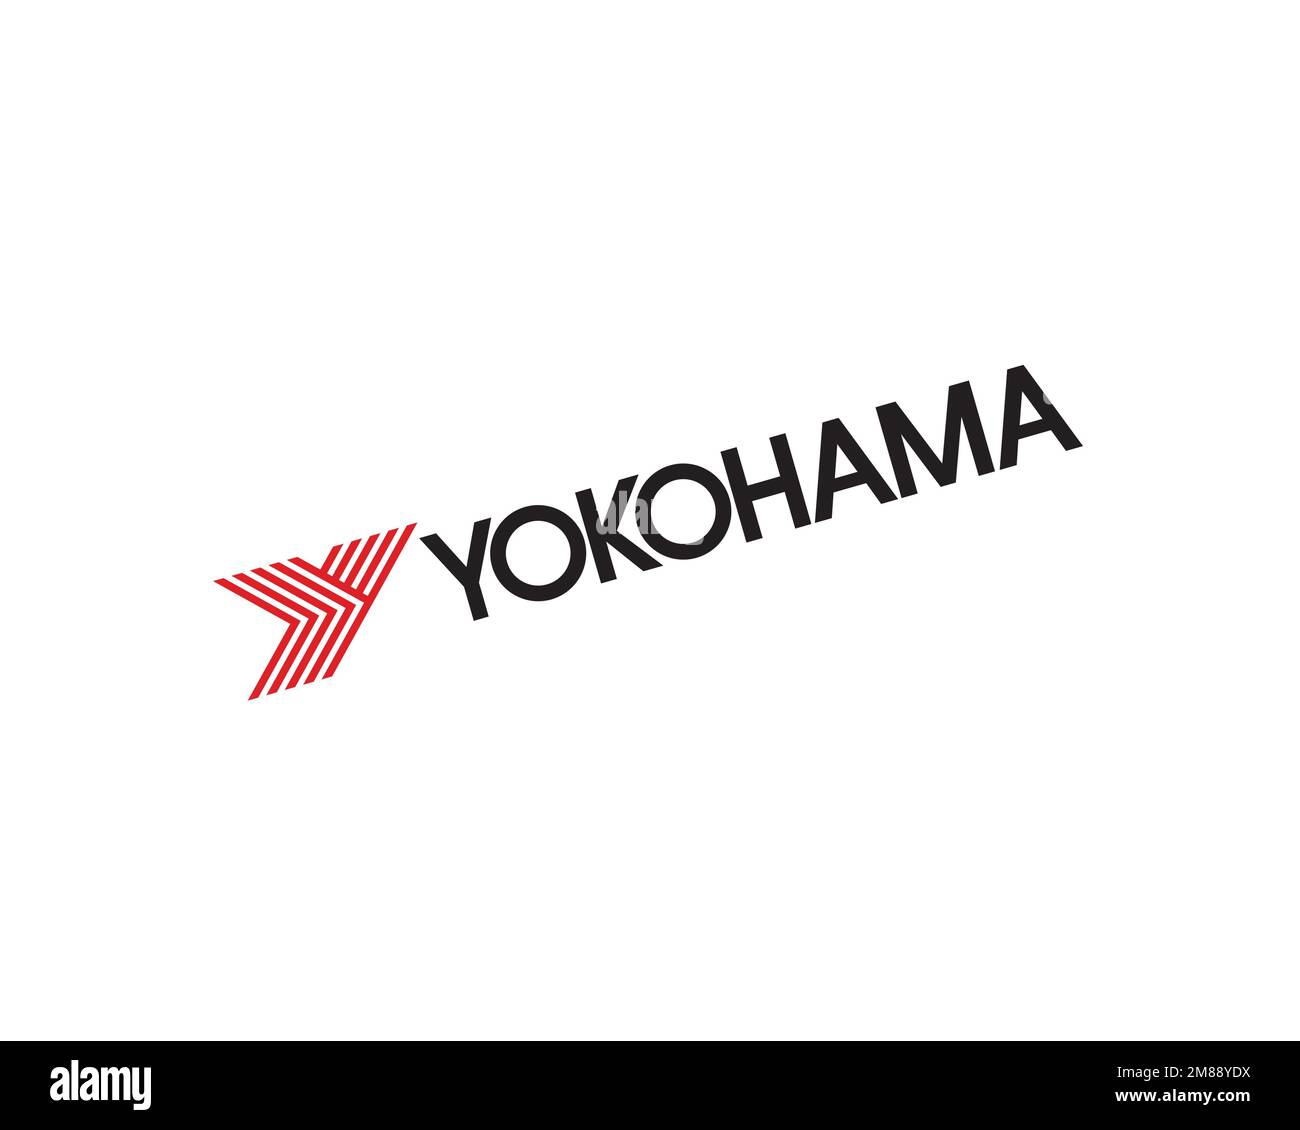 Yokohama Rubber Company, rotated logo, white background Stock Photo